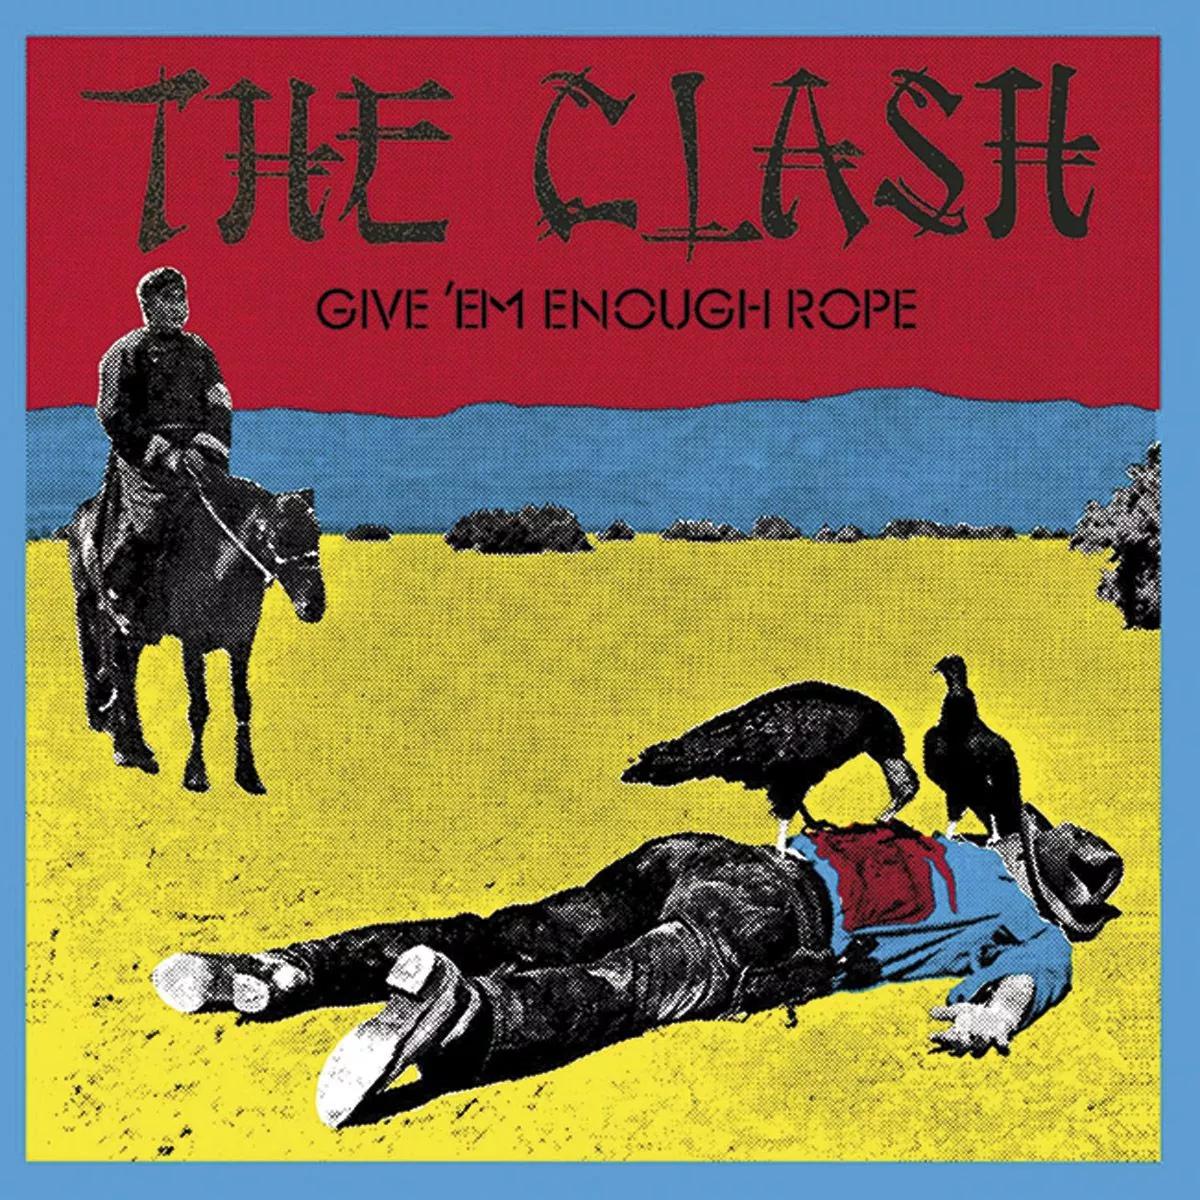 The Clash, portada de "Give 'em enough rope"